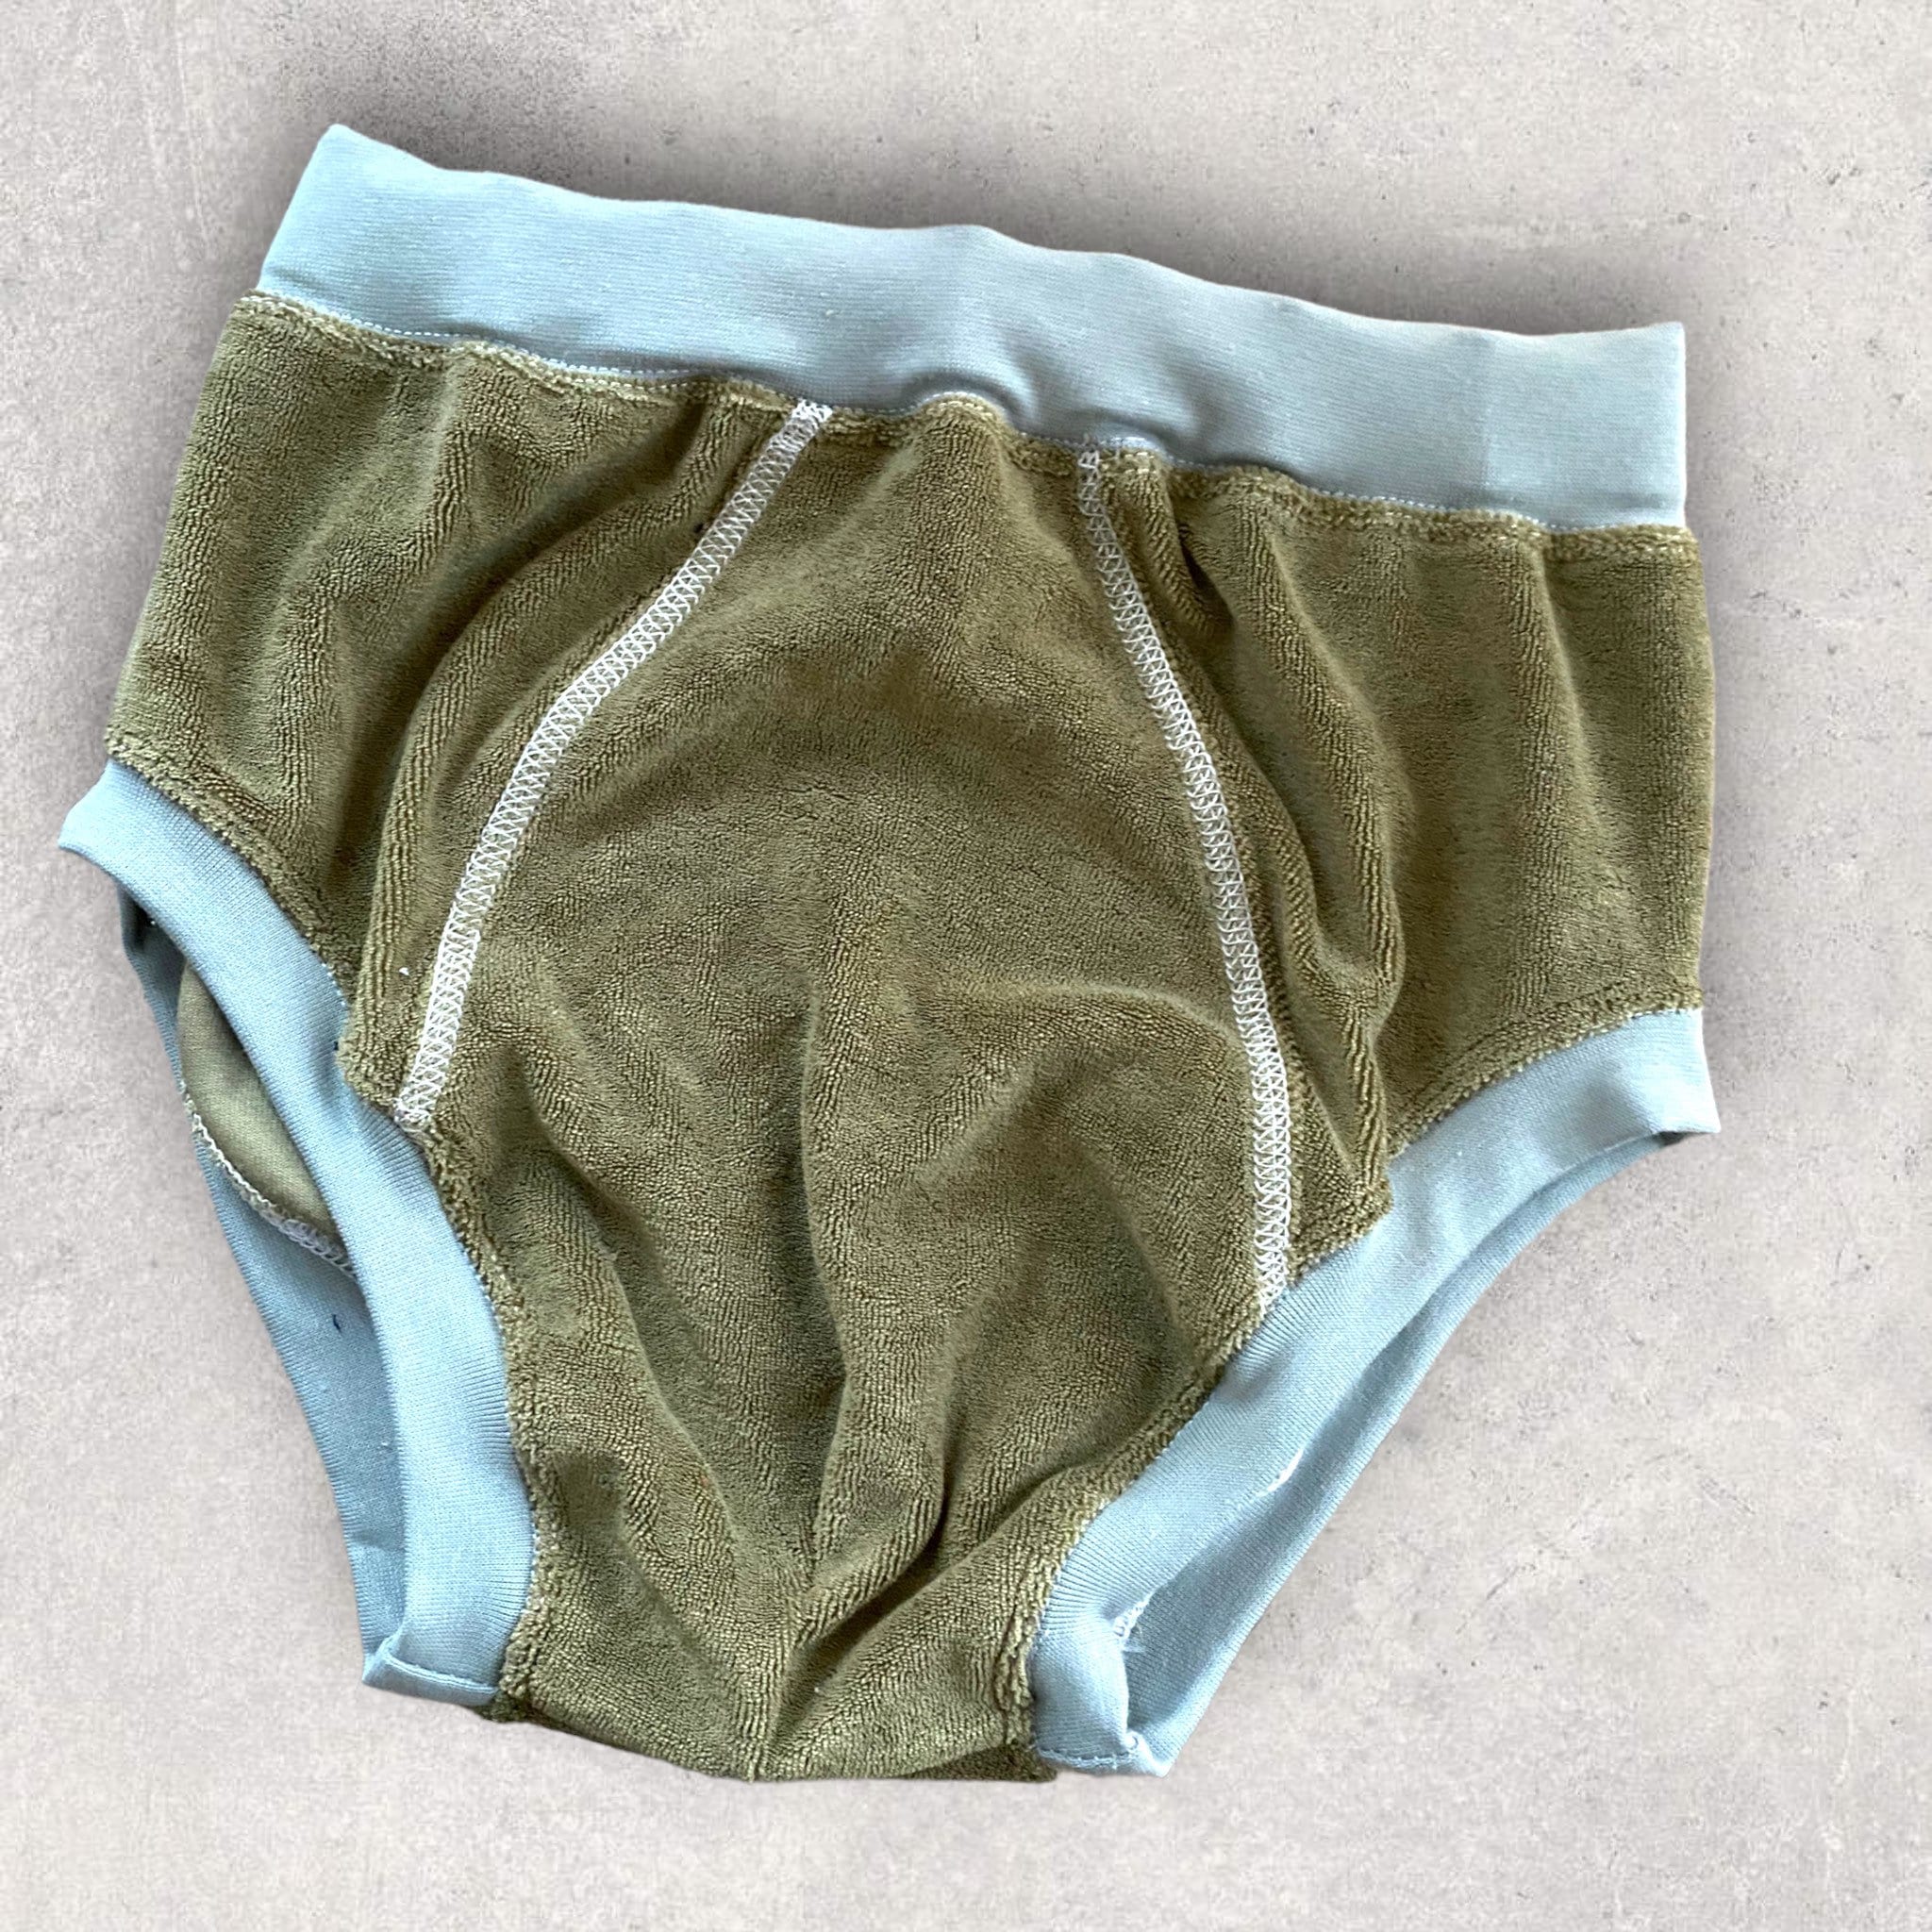 Adult Man Briefs Pants Trainer FROTTEE Boys Underwear Unterhose Slip  Germany Worldwide Flic.kr/s/ahbqja96ch 